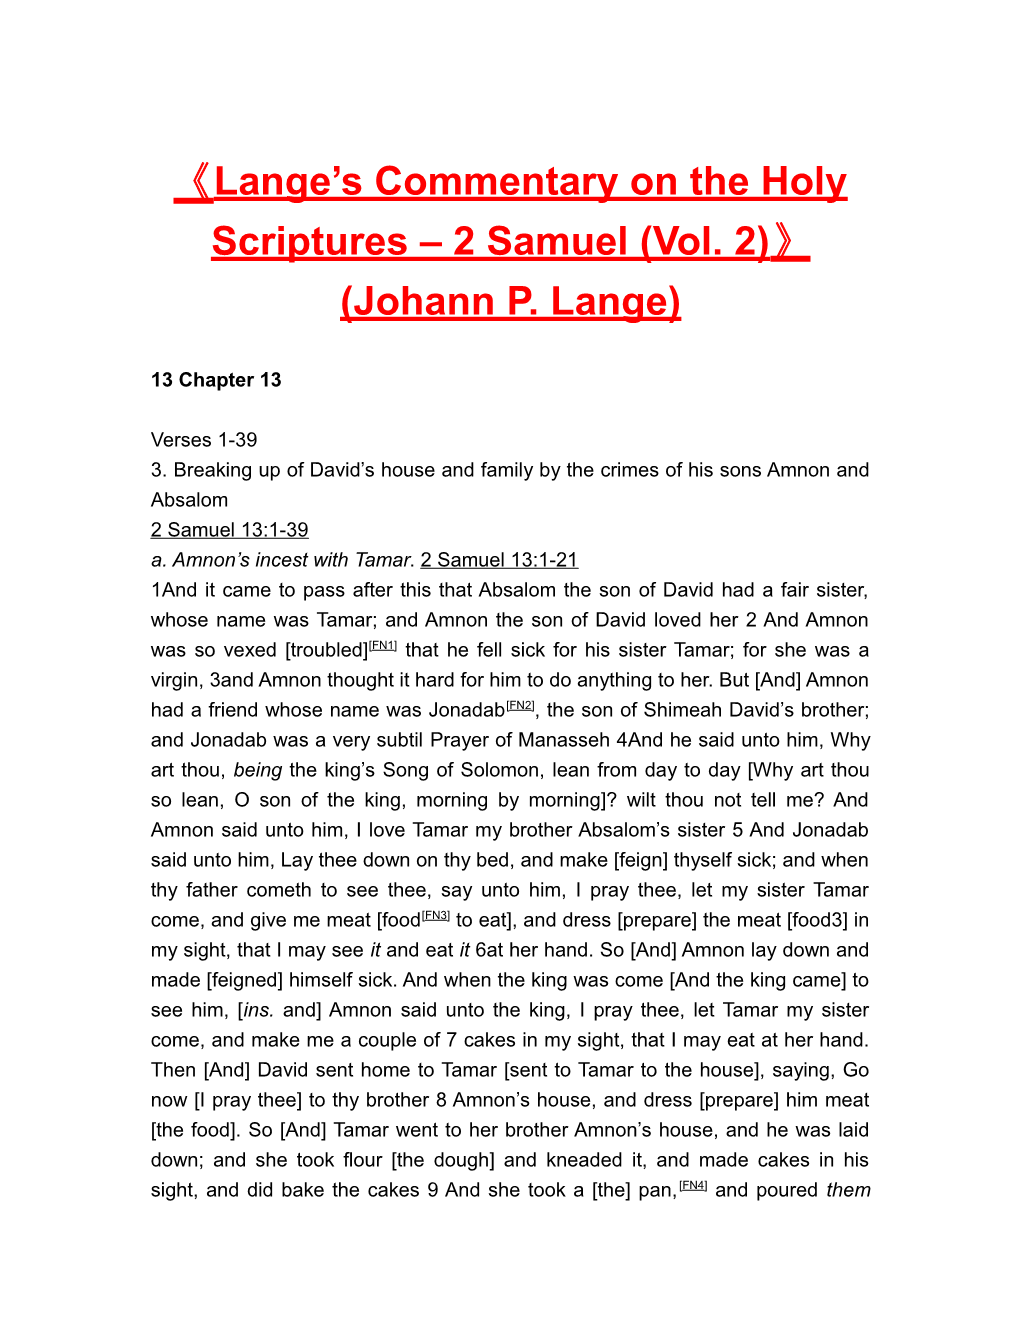 Lange S Commentary on the Holy Scriptures 2 Samuel (Vol. 2) (Johann P. Lange)